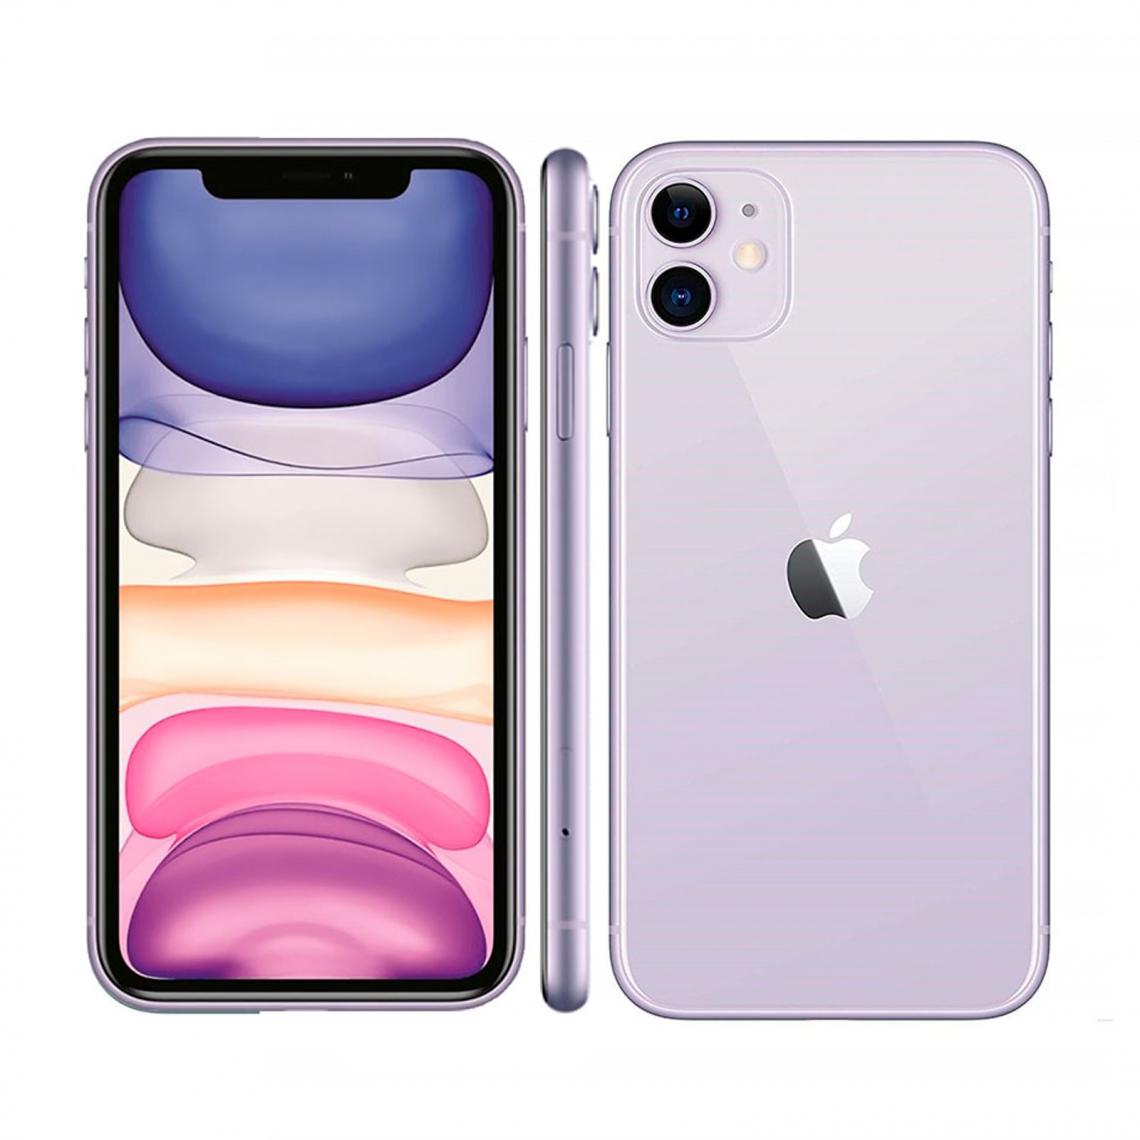 Apple - iPhone 11 64GB, Color Purpura, Batería 3110mAh - iPhone